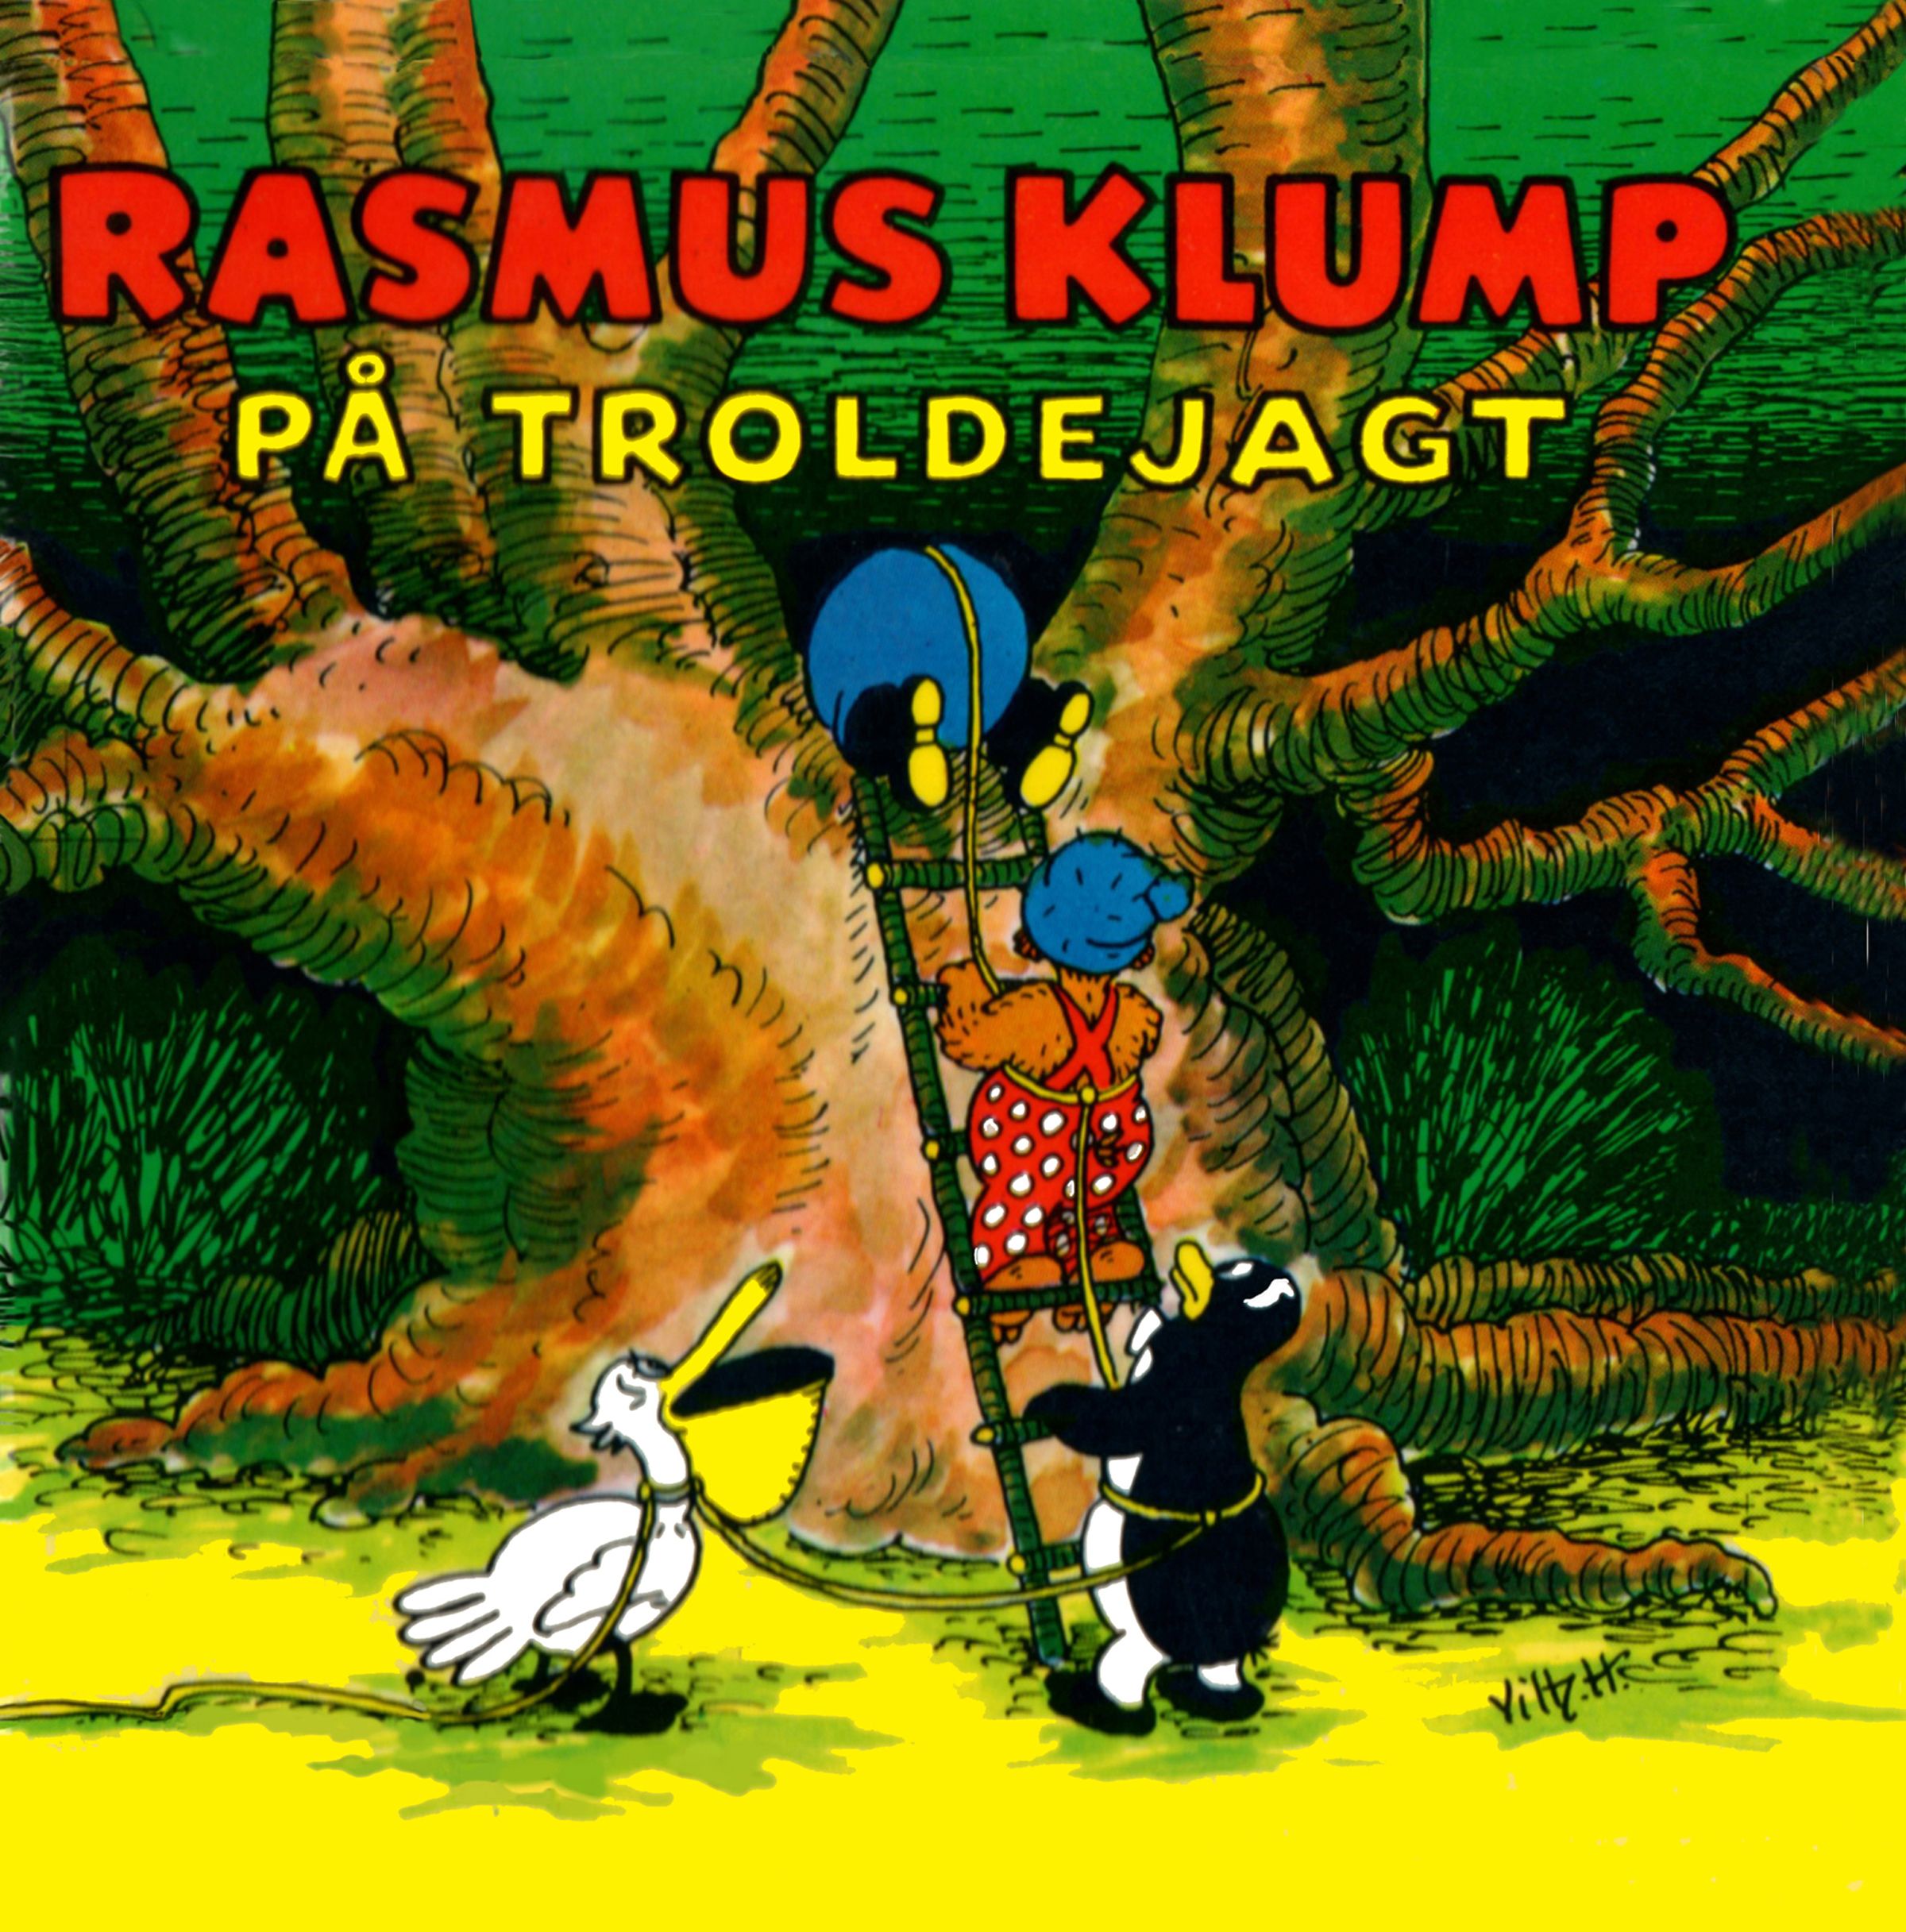 Rasmus Klump på troldejagt, audiobook by Carla Og Vilh. Hansen